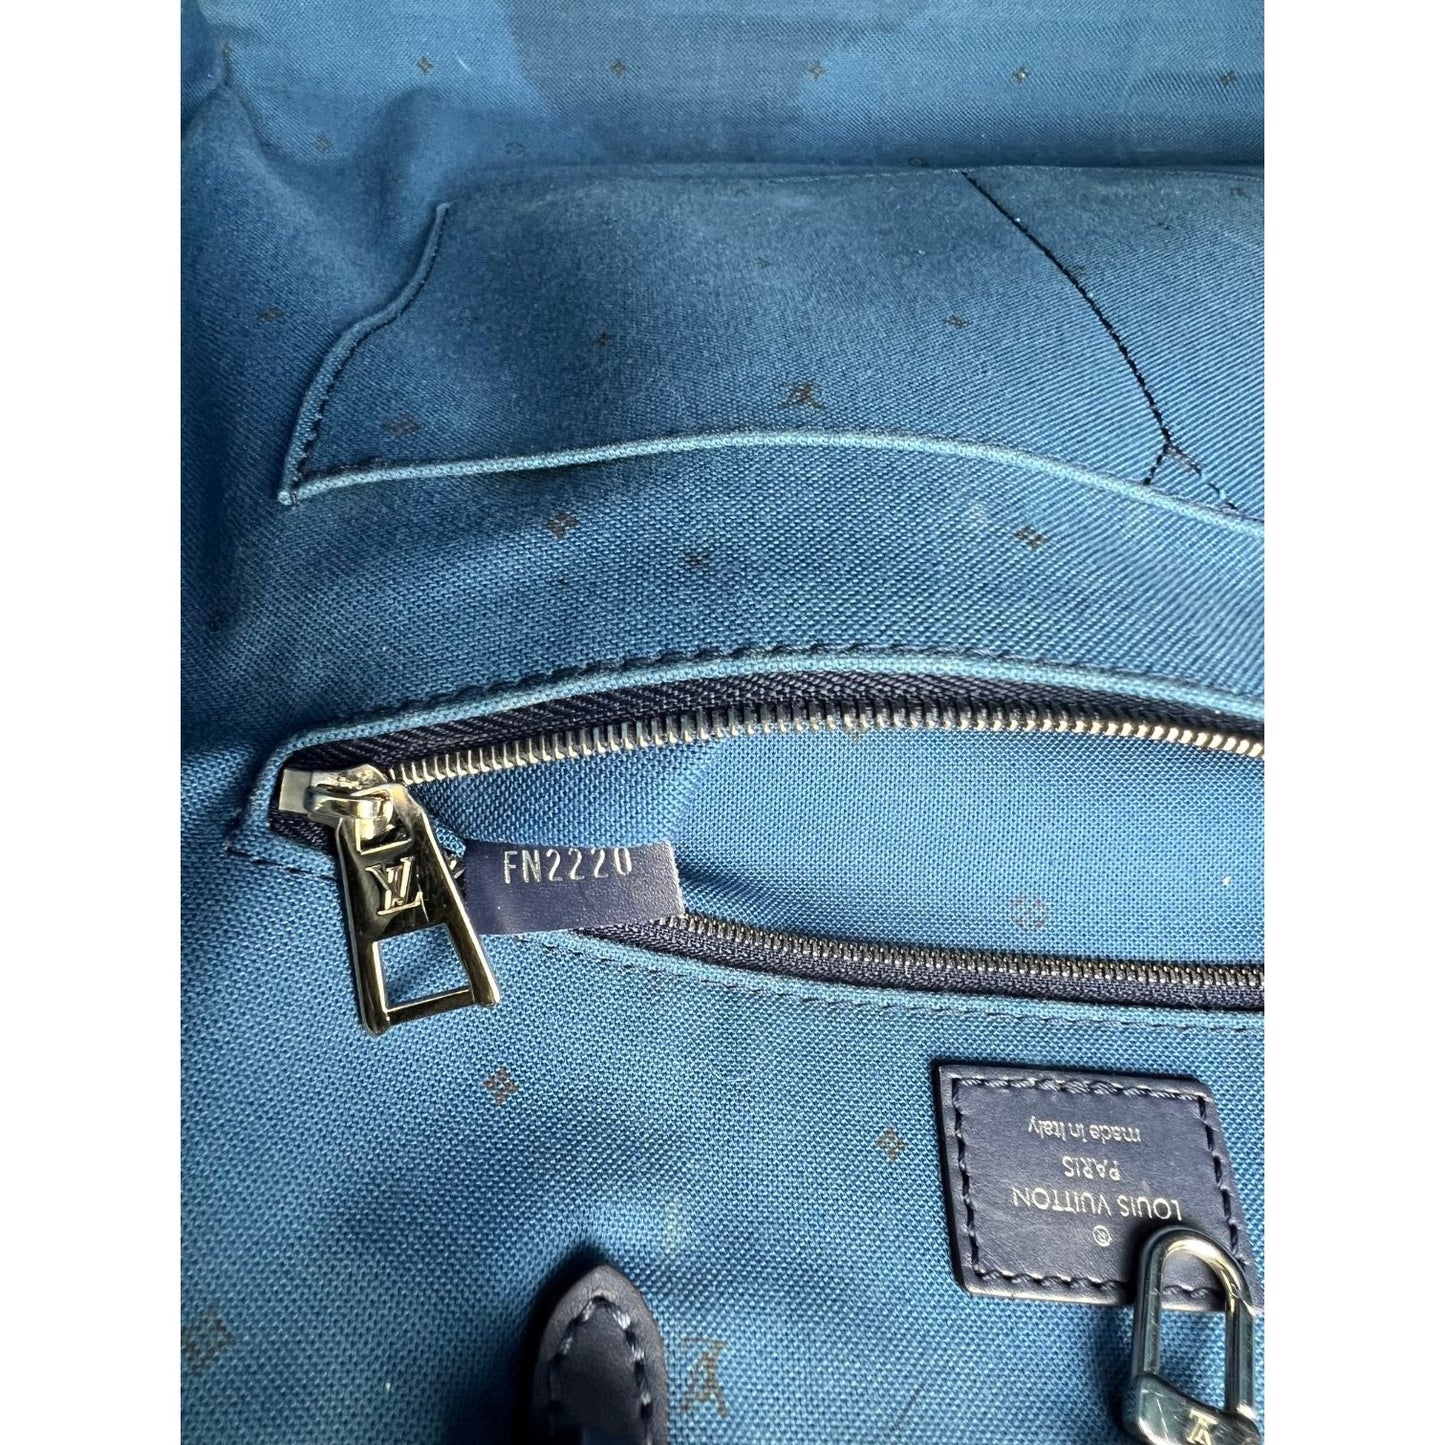 louis vuitton monogram tote bag with zipper